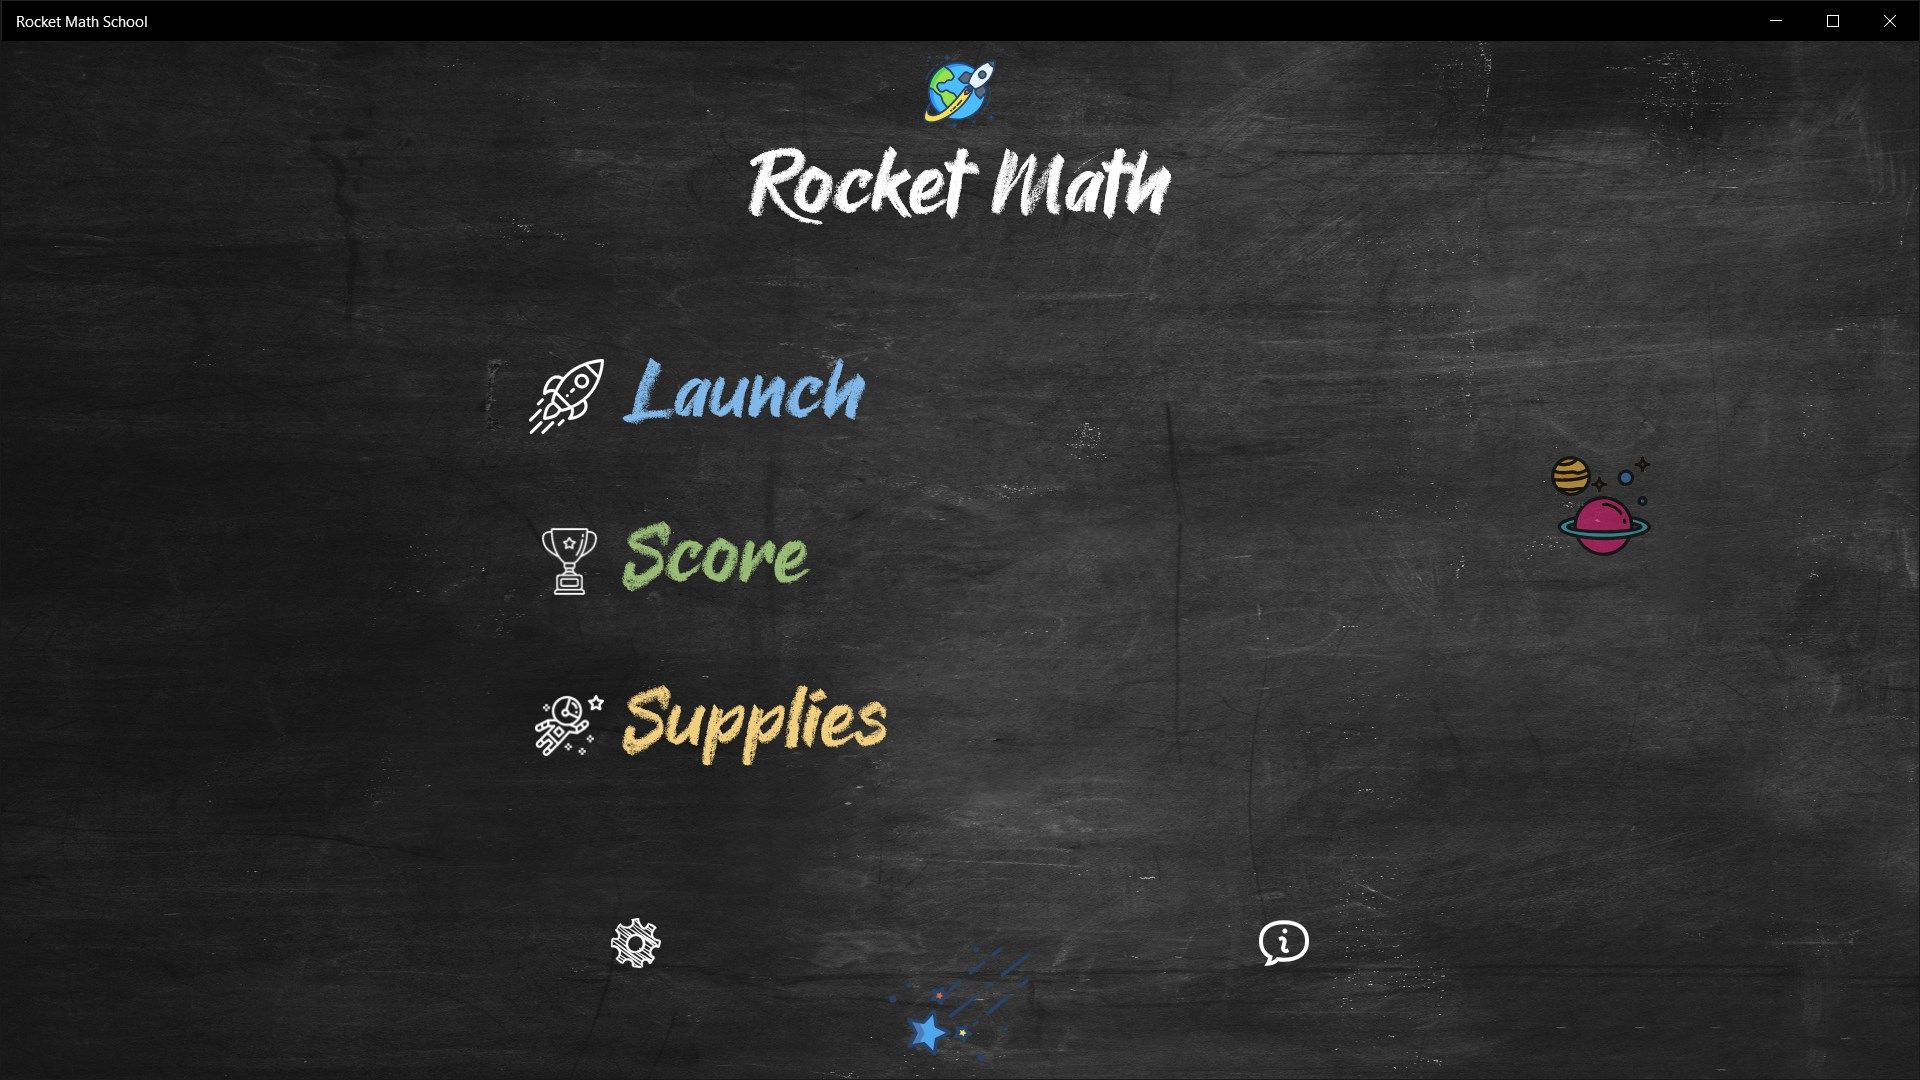 Rocket Math School